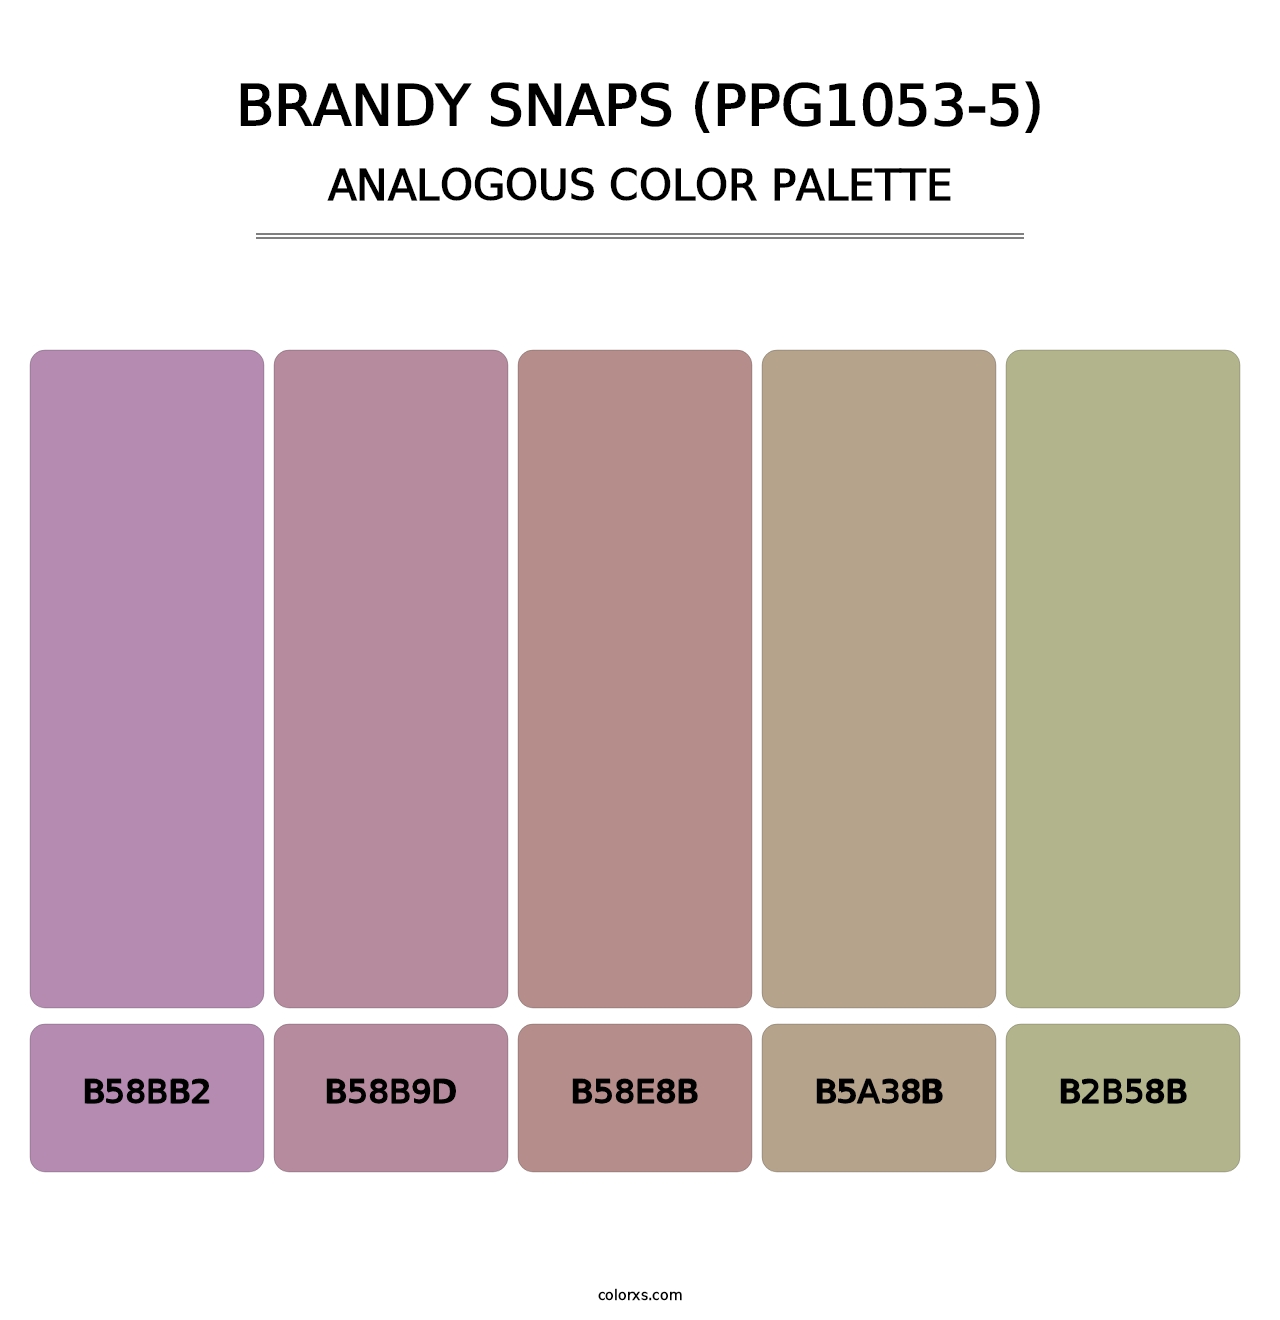 Brandy Snaps (PPG1053-5) - Analogous Color Palette